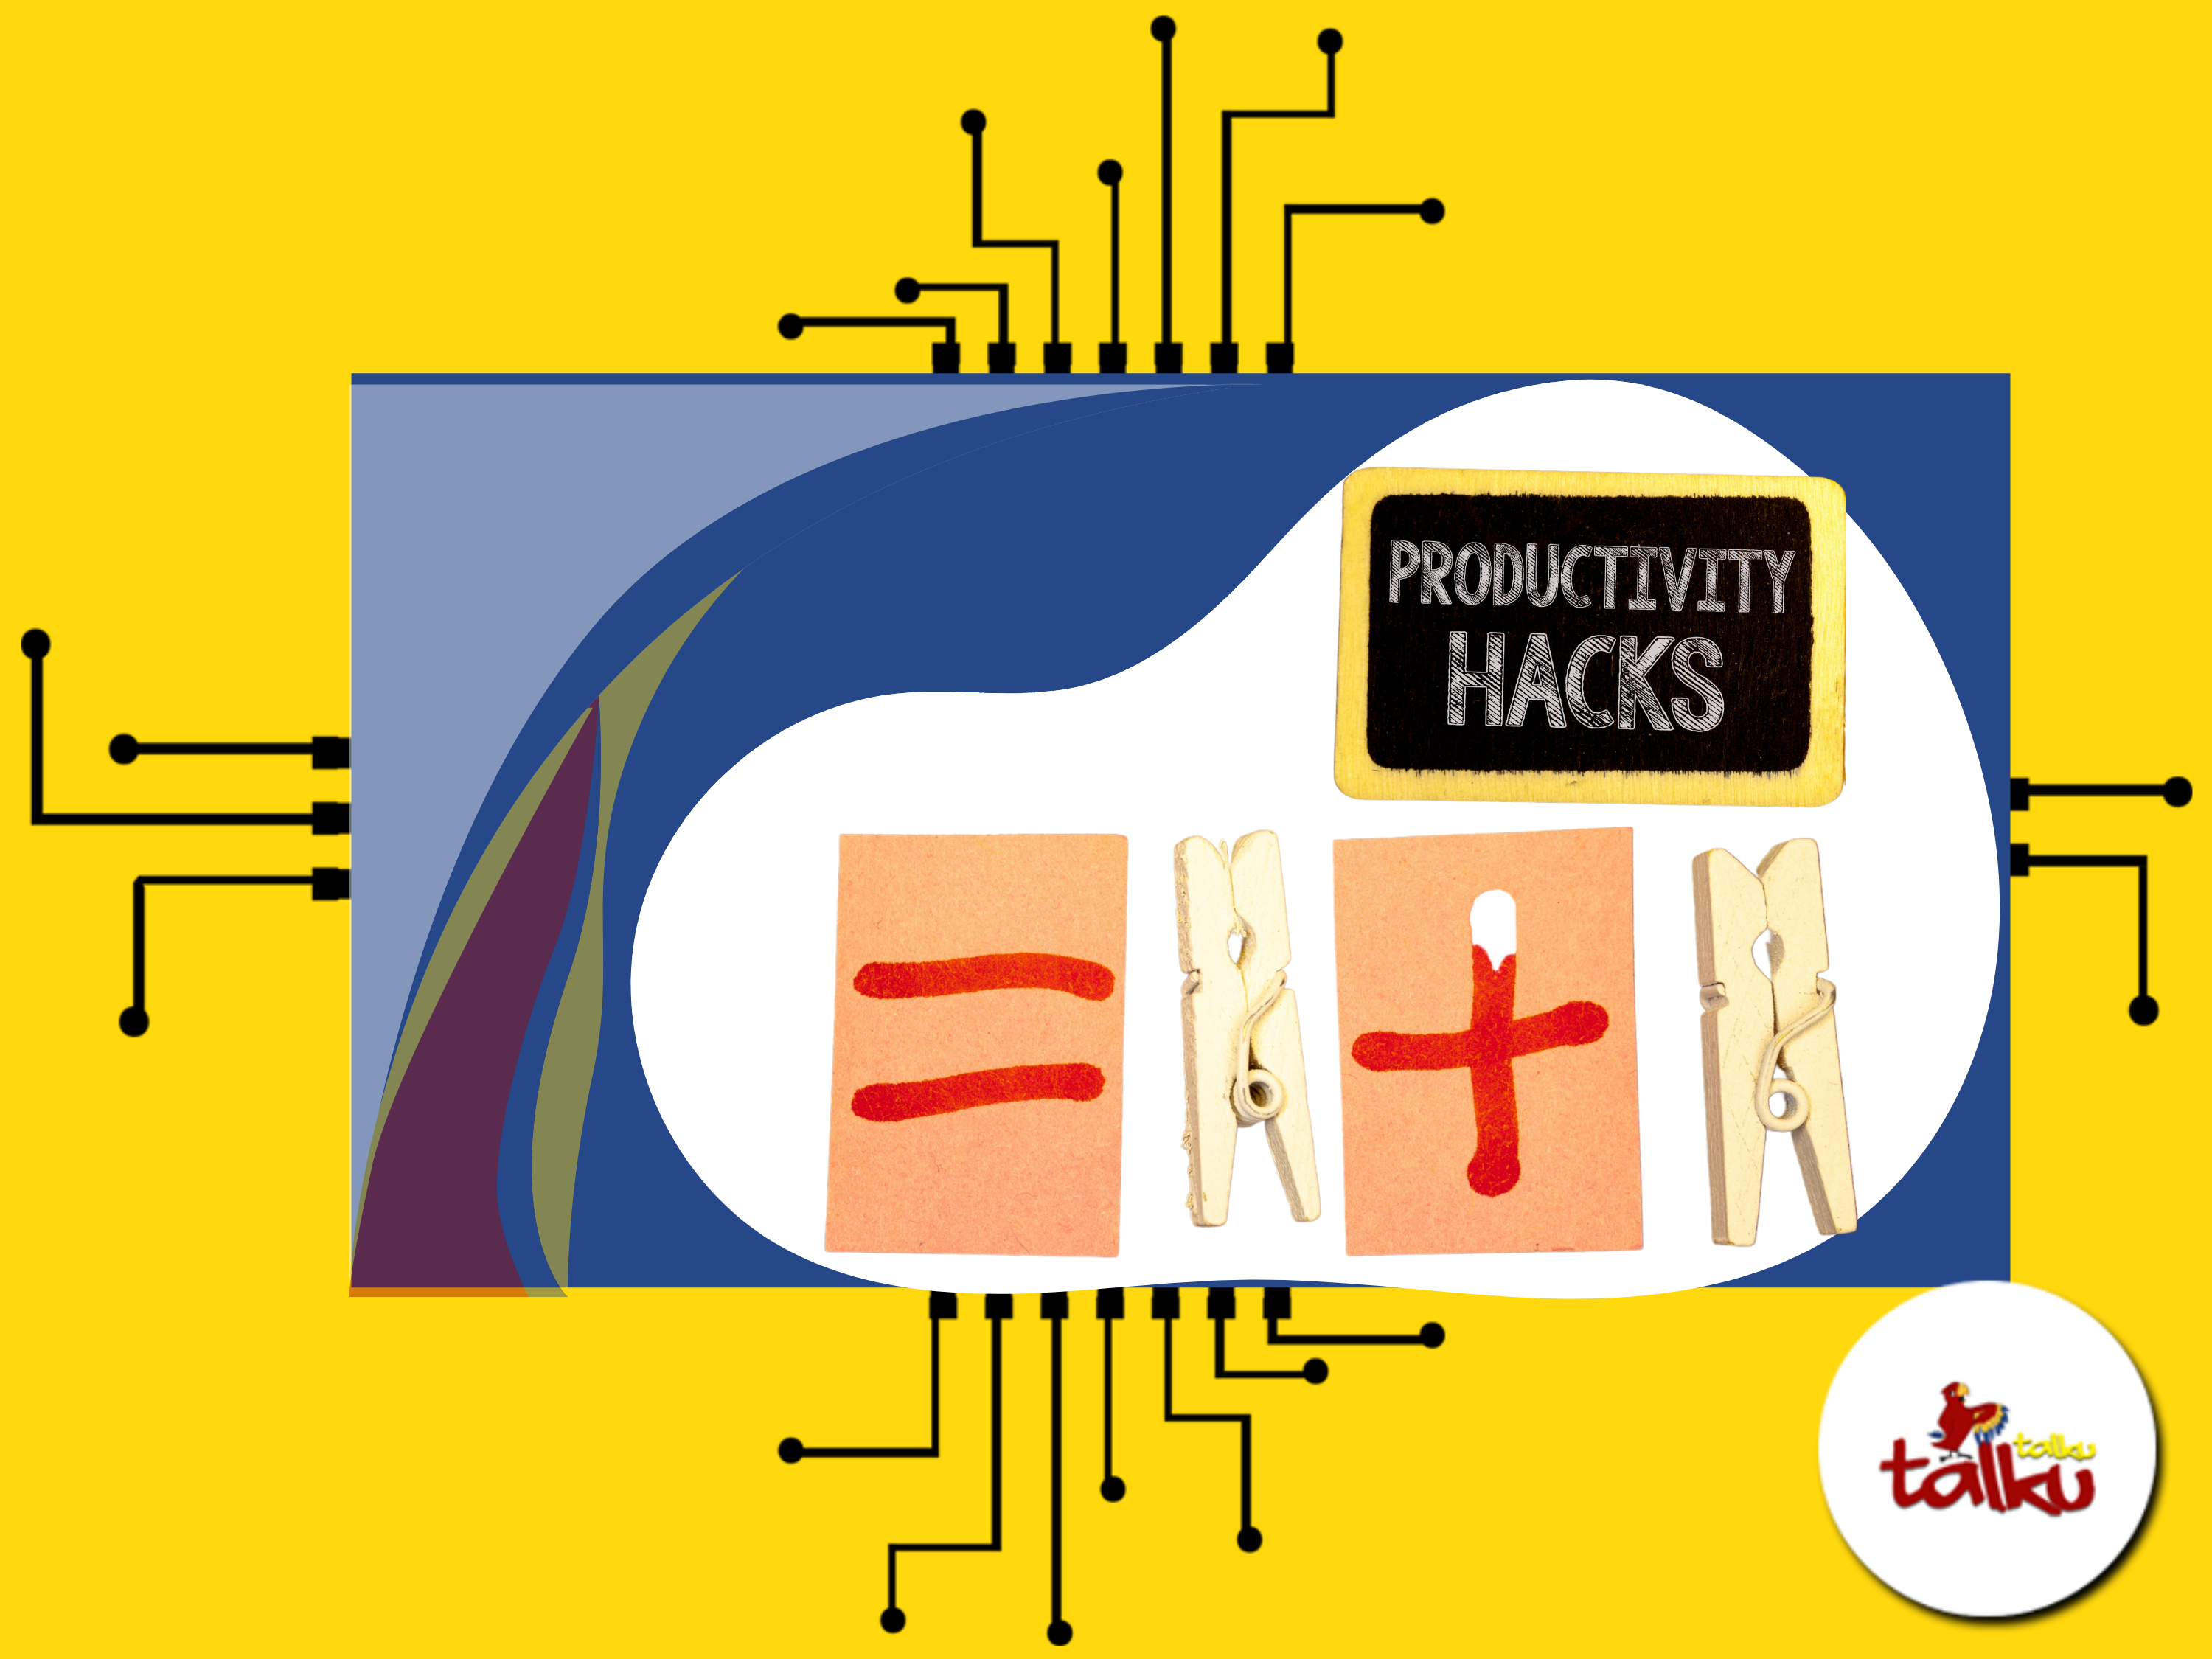 Productivity hacks for creativity boost